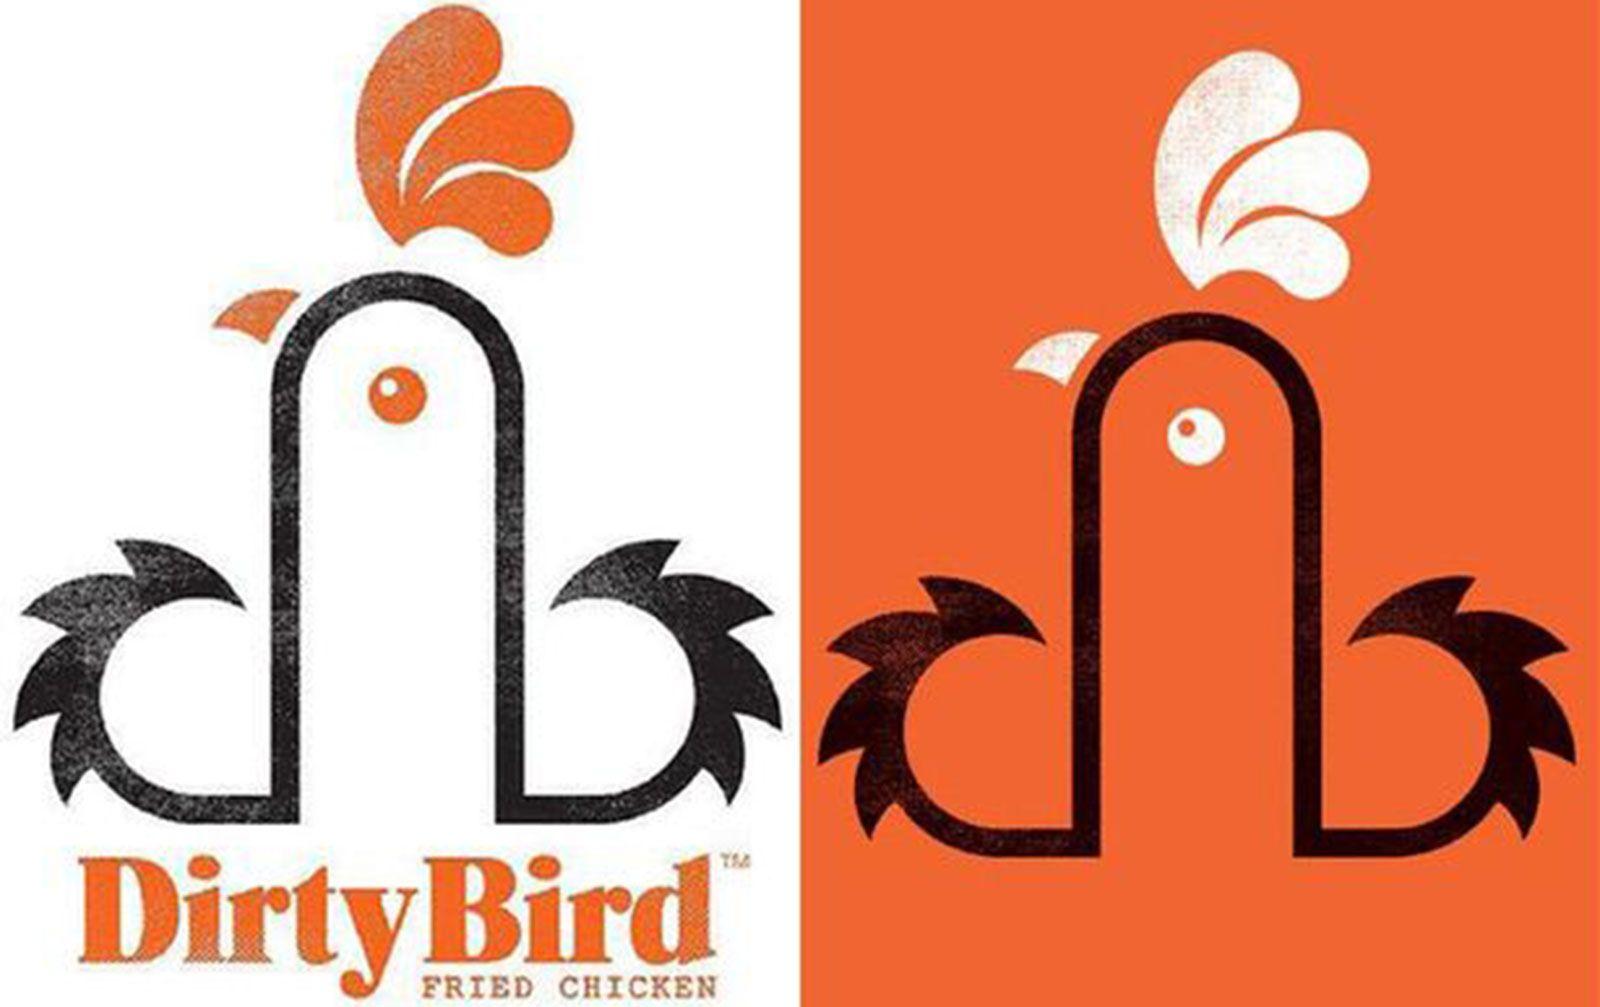 Orange Bird Company Logo - Dirty Bird logo - crude but clever | Blog | Amplify PR